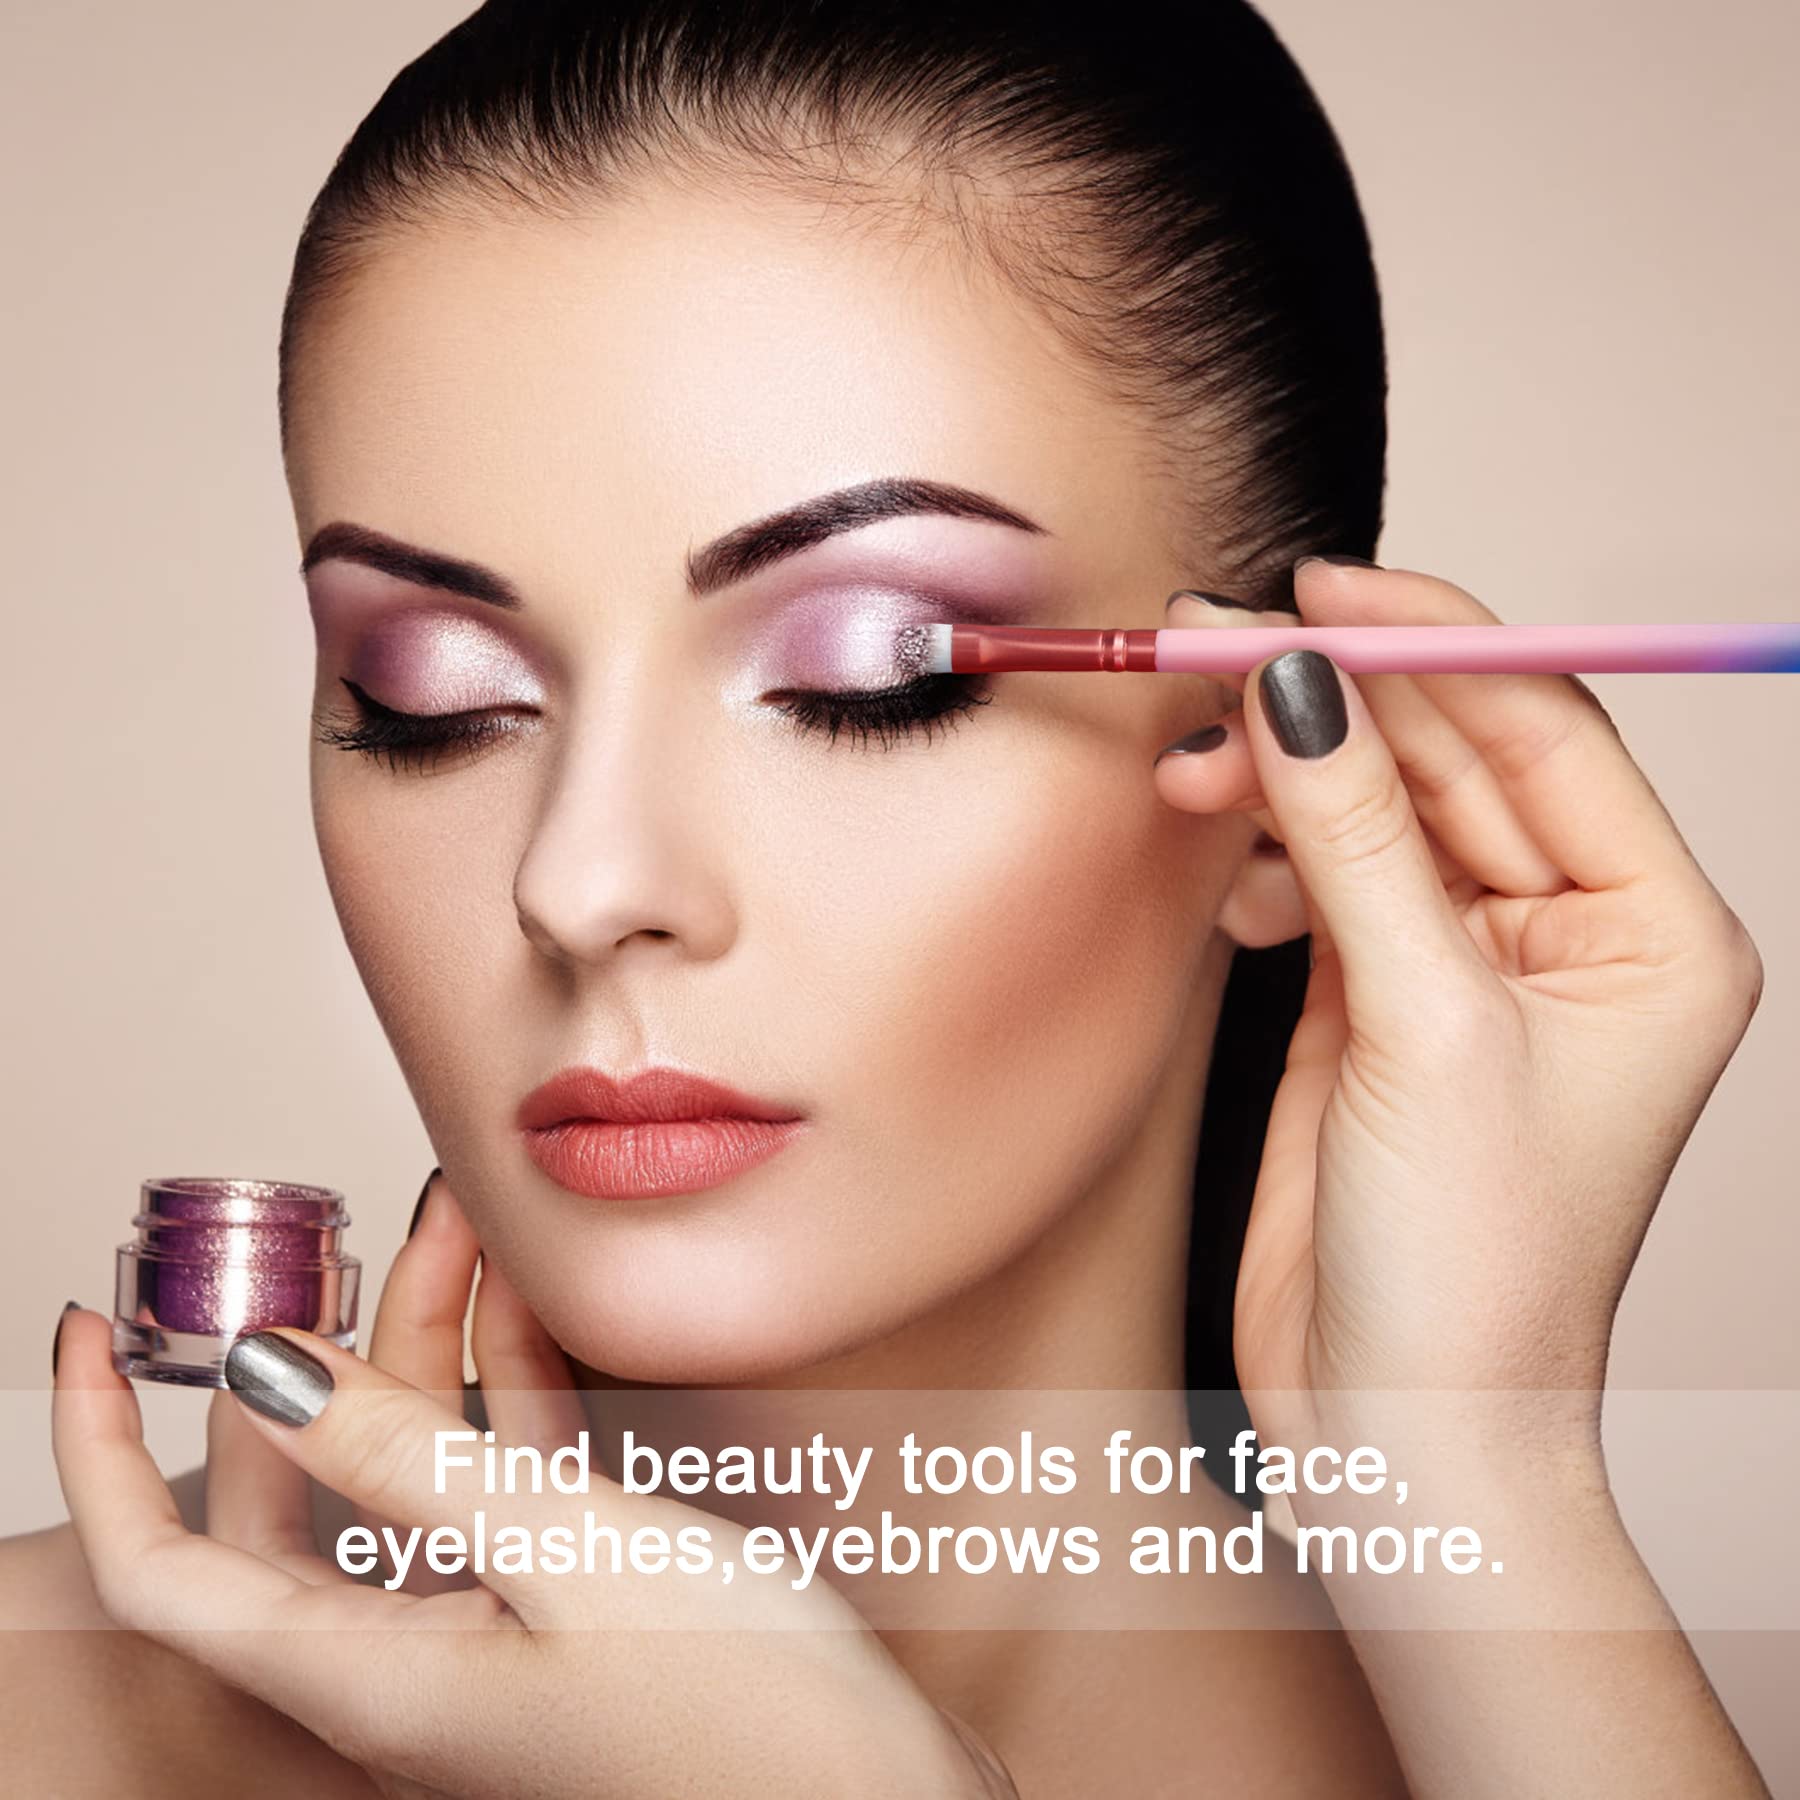 Makeup Brushes - 12 Pcs Makeup Brush Sets for Foundation Eyeshadow Eyebrow Eyeliner Blush Powder Concealer Contour Shadows with Case